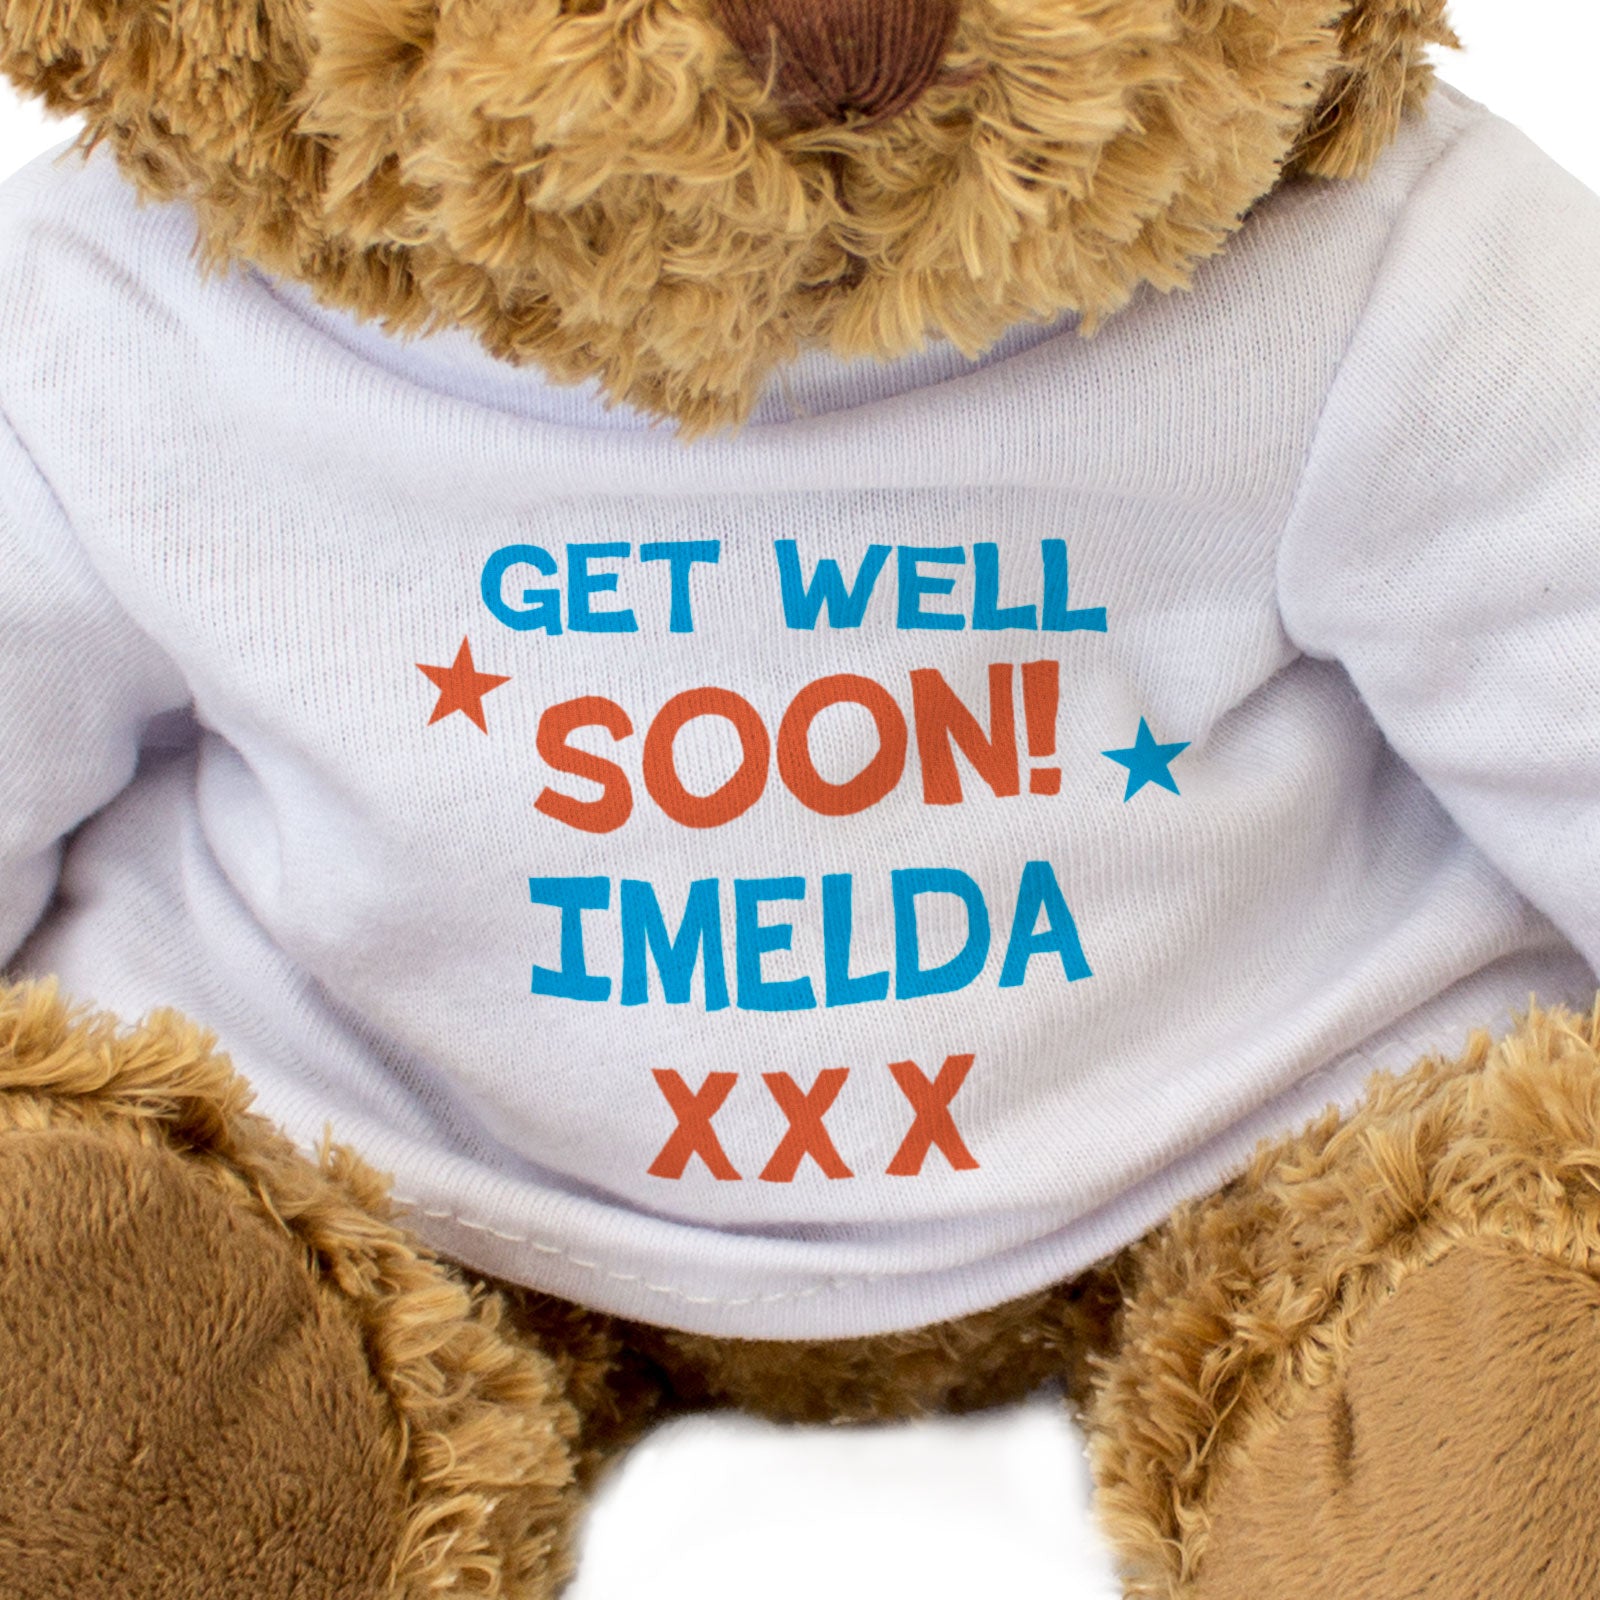 Get Well Soon Imelda - Teddy Bear